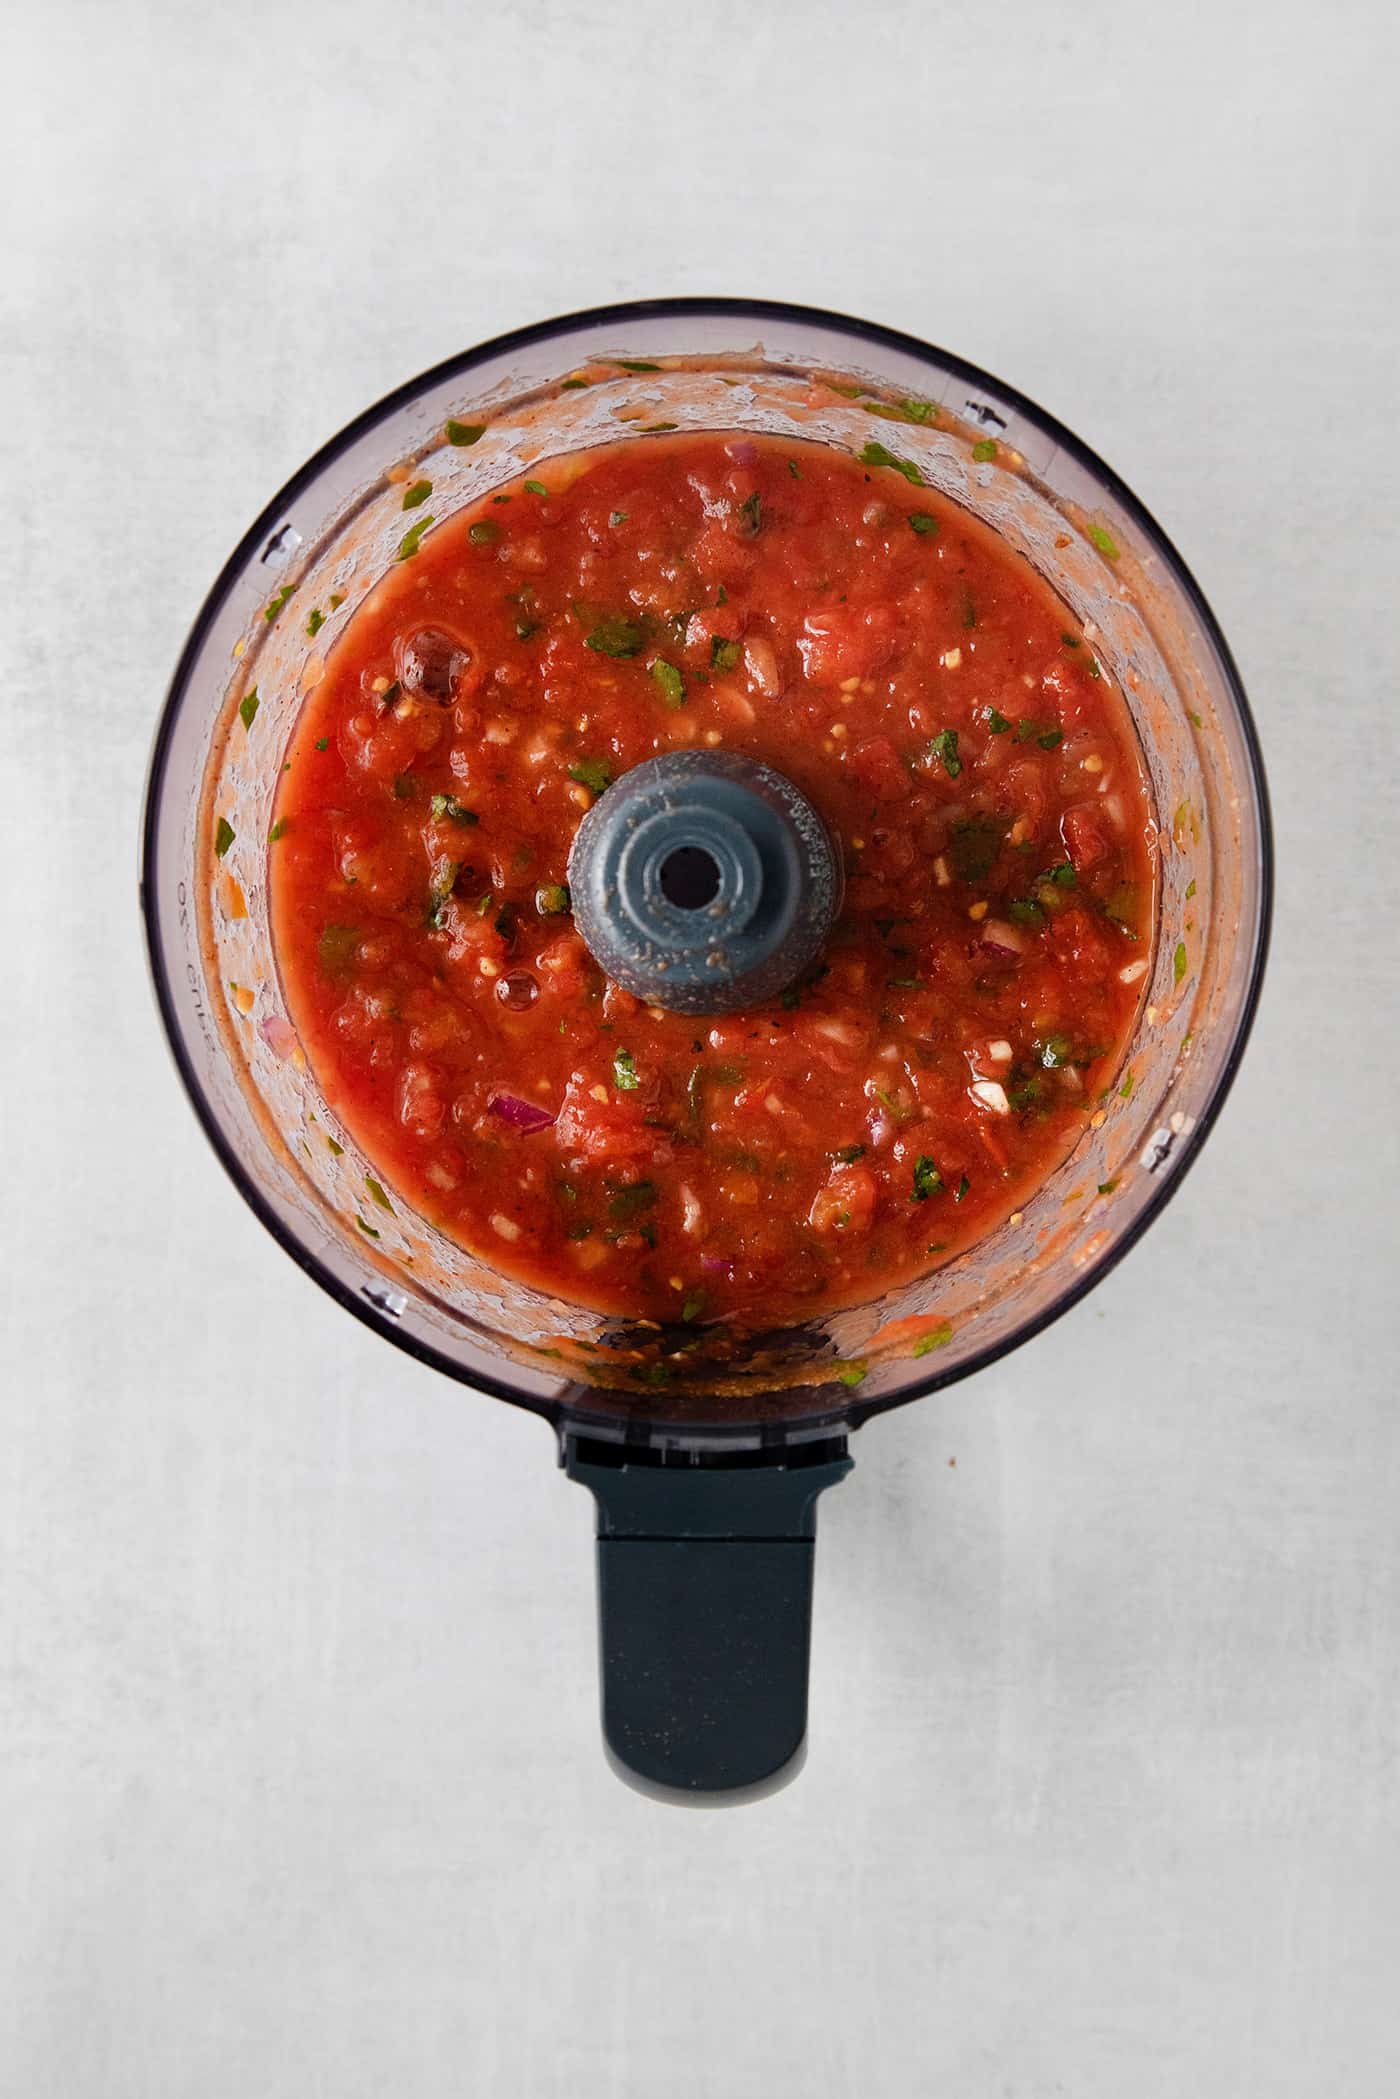 Blender salsa in a food processor